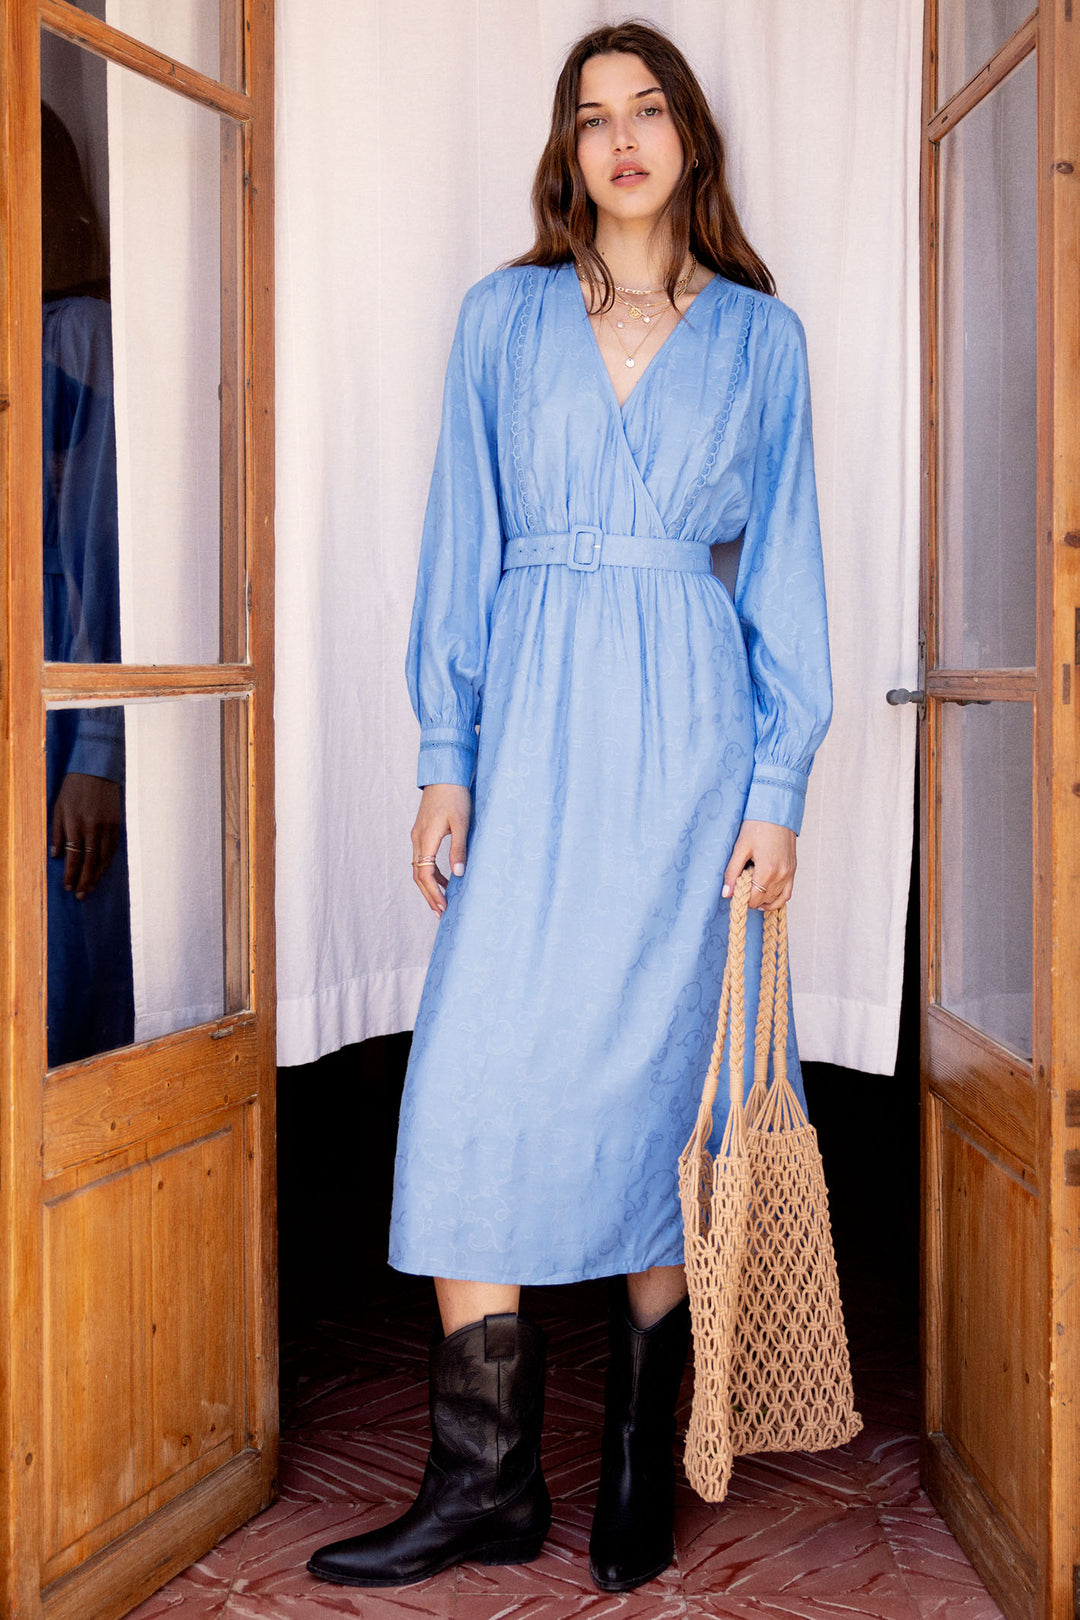 Atelier Reve 20120200 IRLOWLY Marina Blue Long Sleeve Dress - Dotique Chesterfield